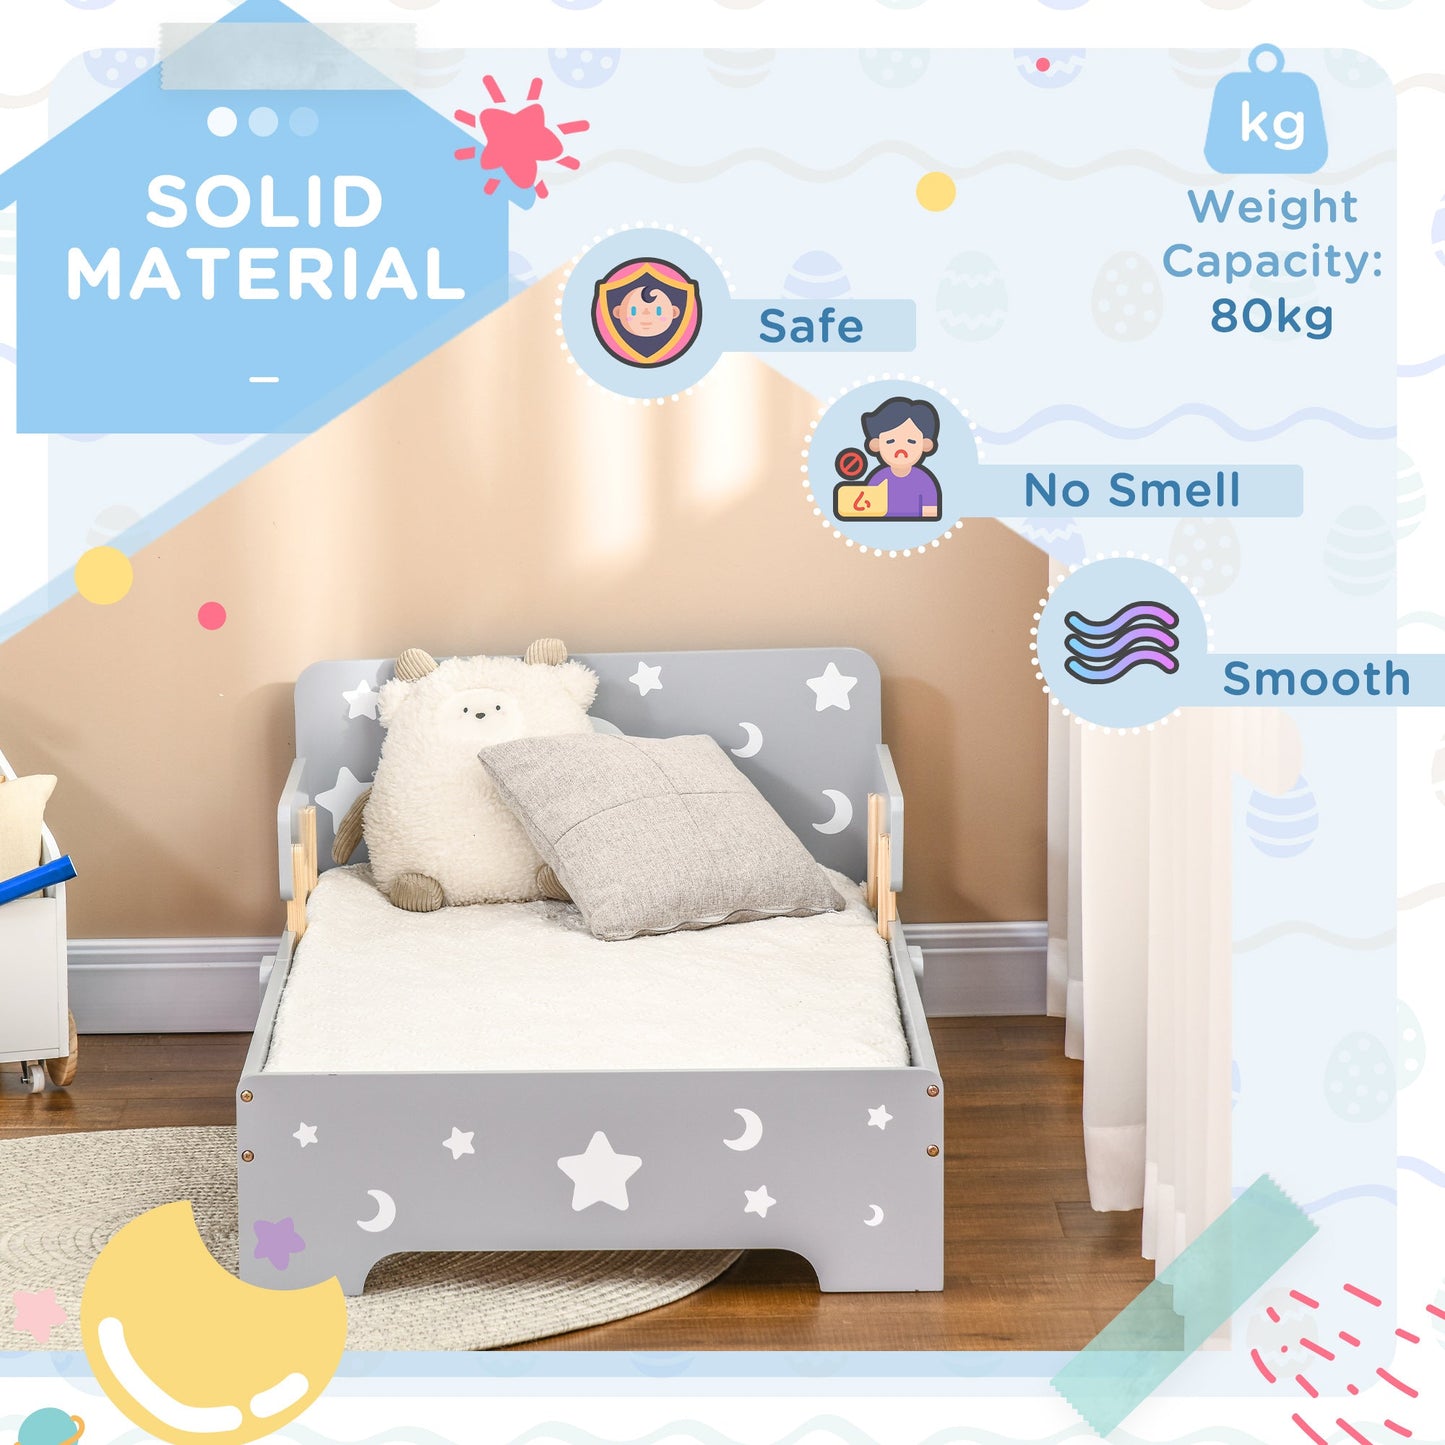 ZONEKIZ Kids Toddler Bed with Star & Moon Patterns, Safety Side Rails Slats, Kids Bedroom Furniture for Boys Girls 3-6 Years Old